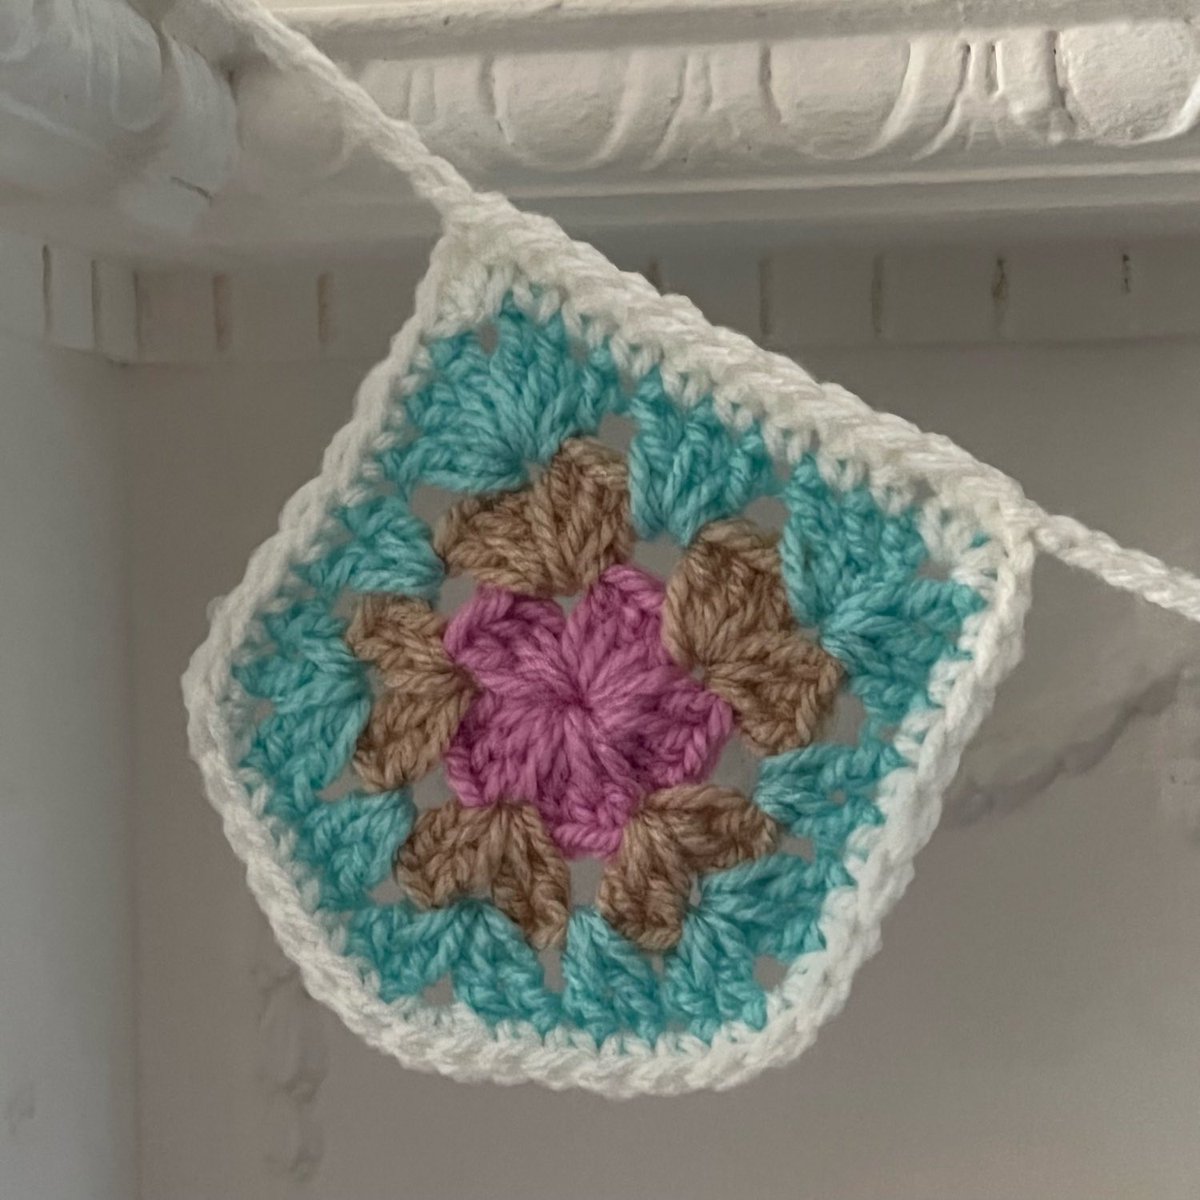 Crochet Pentagon Garland Granny Stitch Bunting Pattern  #crochet #homeimprovement #crochetpattern #earlybiz #sbs #smallbiz #grannysquare #crochetgarland #etsy #funcrafts #pretty #crochetbunting #crochetgift #beginnercrochet #crocheting etsy.me/3J93yeJ